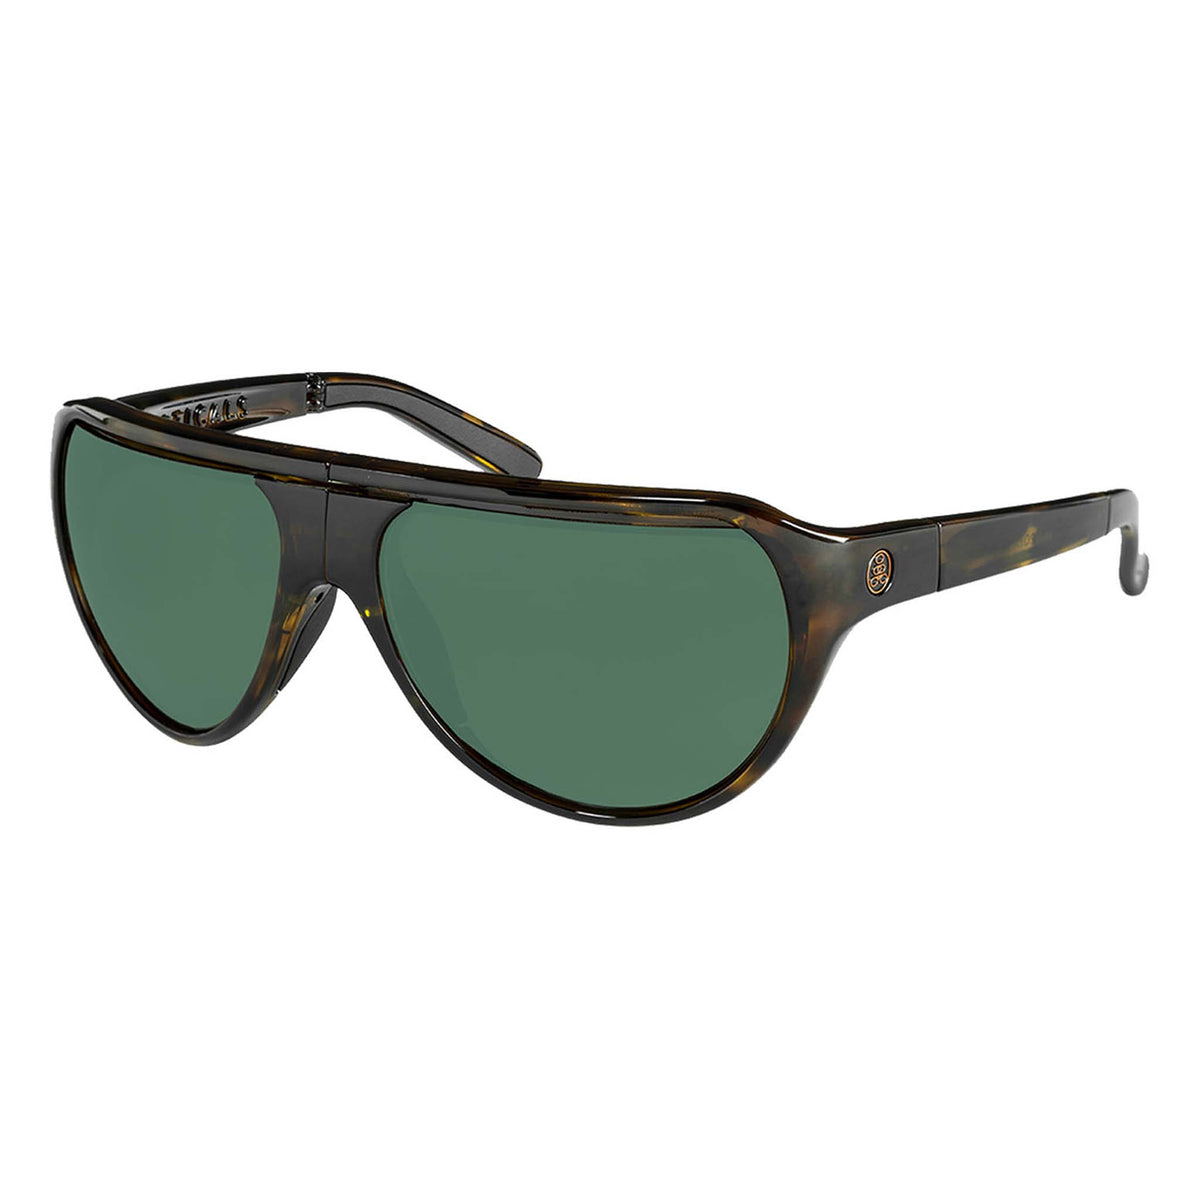 Popticals, Premium Compact Sunglasses, PopAir, 300010-CTEP, Polarized Sunglasses, Gloss Tortoise Frame, Green Lenses, Glam View